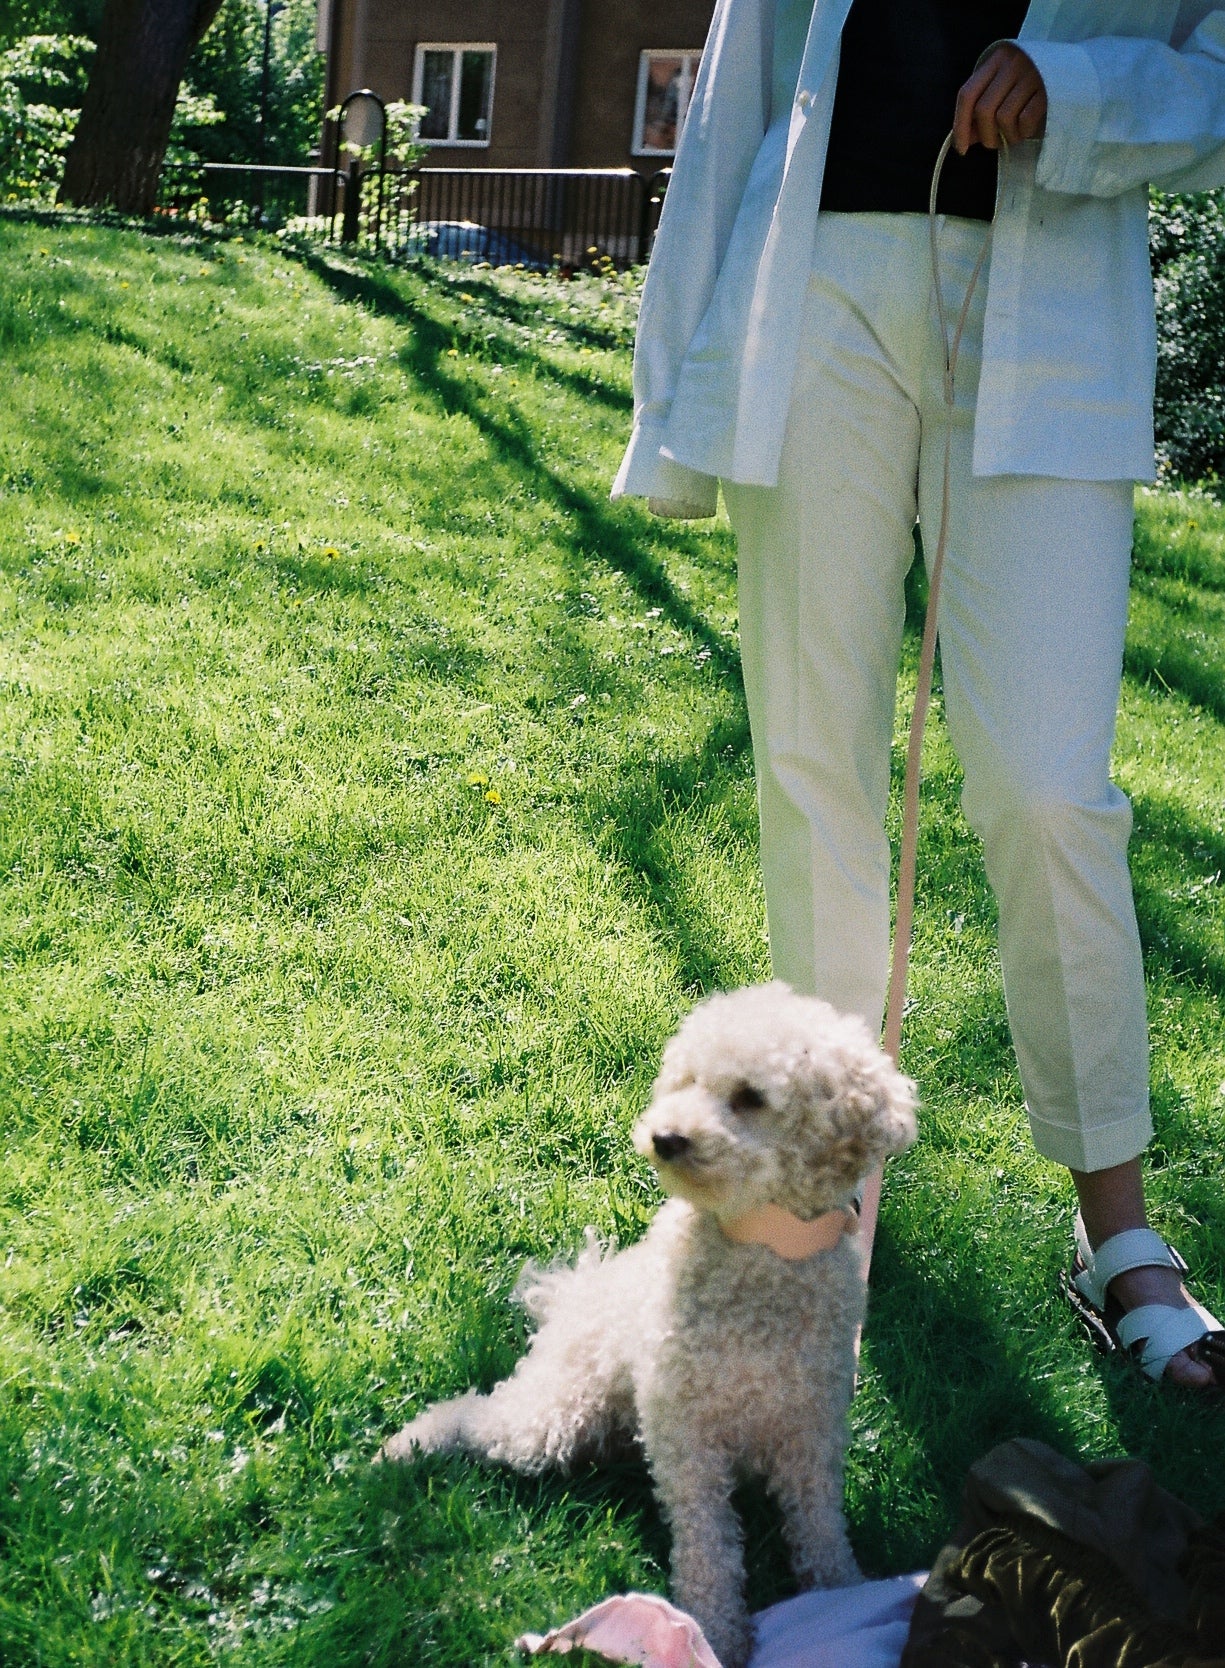 Misja poodle mix on green grass with her owner Dorothy Mörner